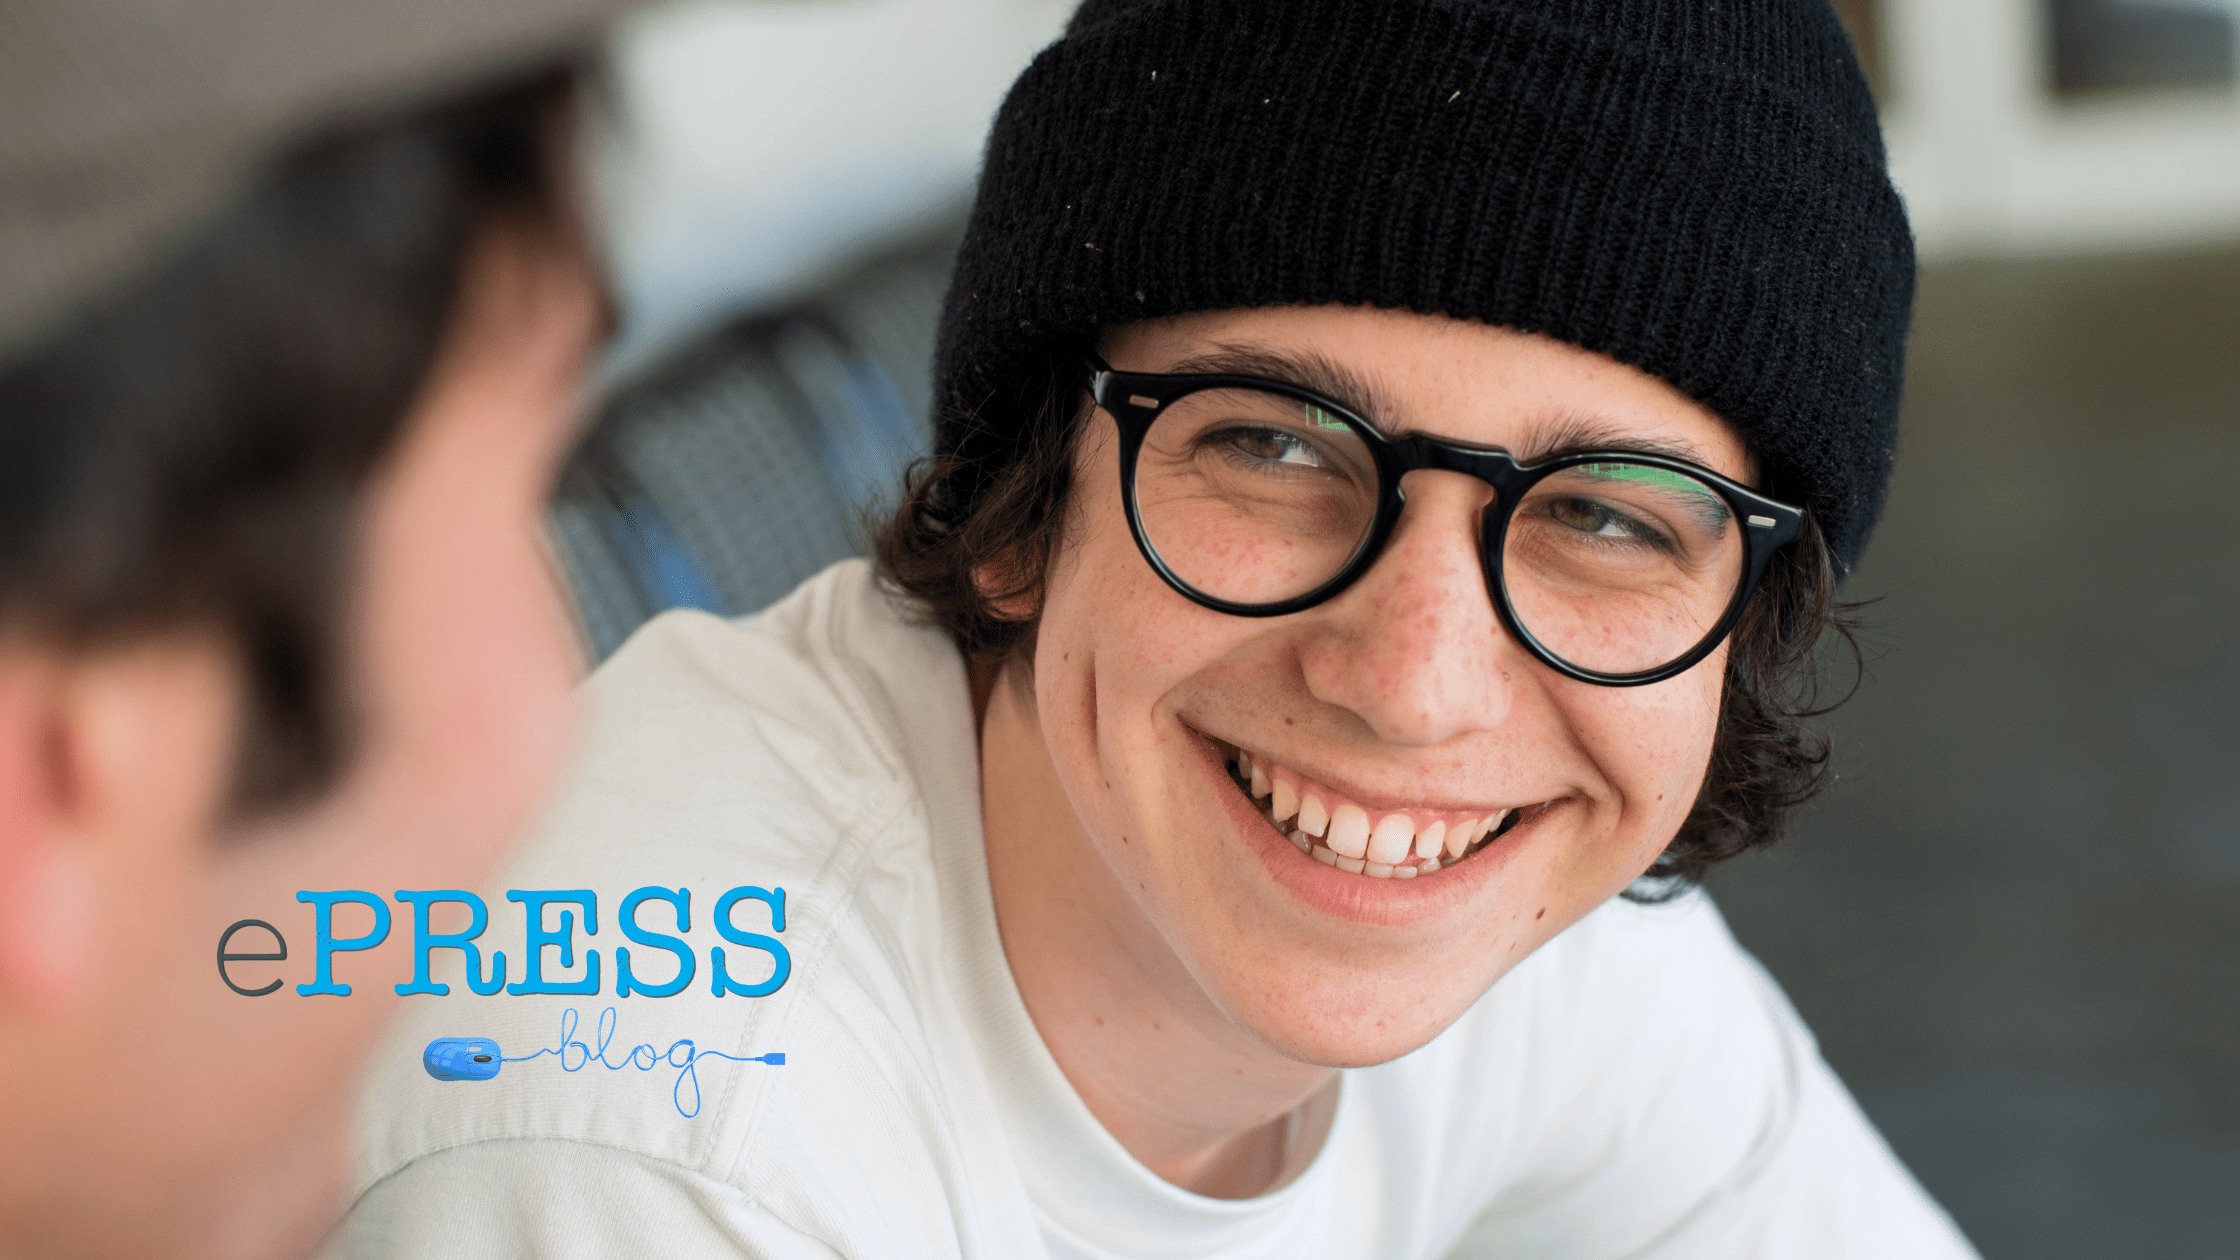 epress blog: talk to your teen